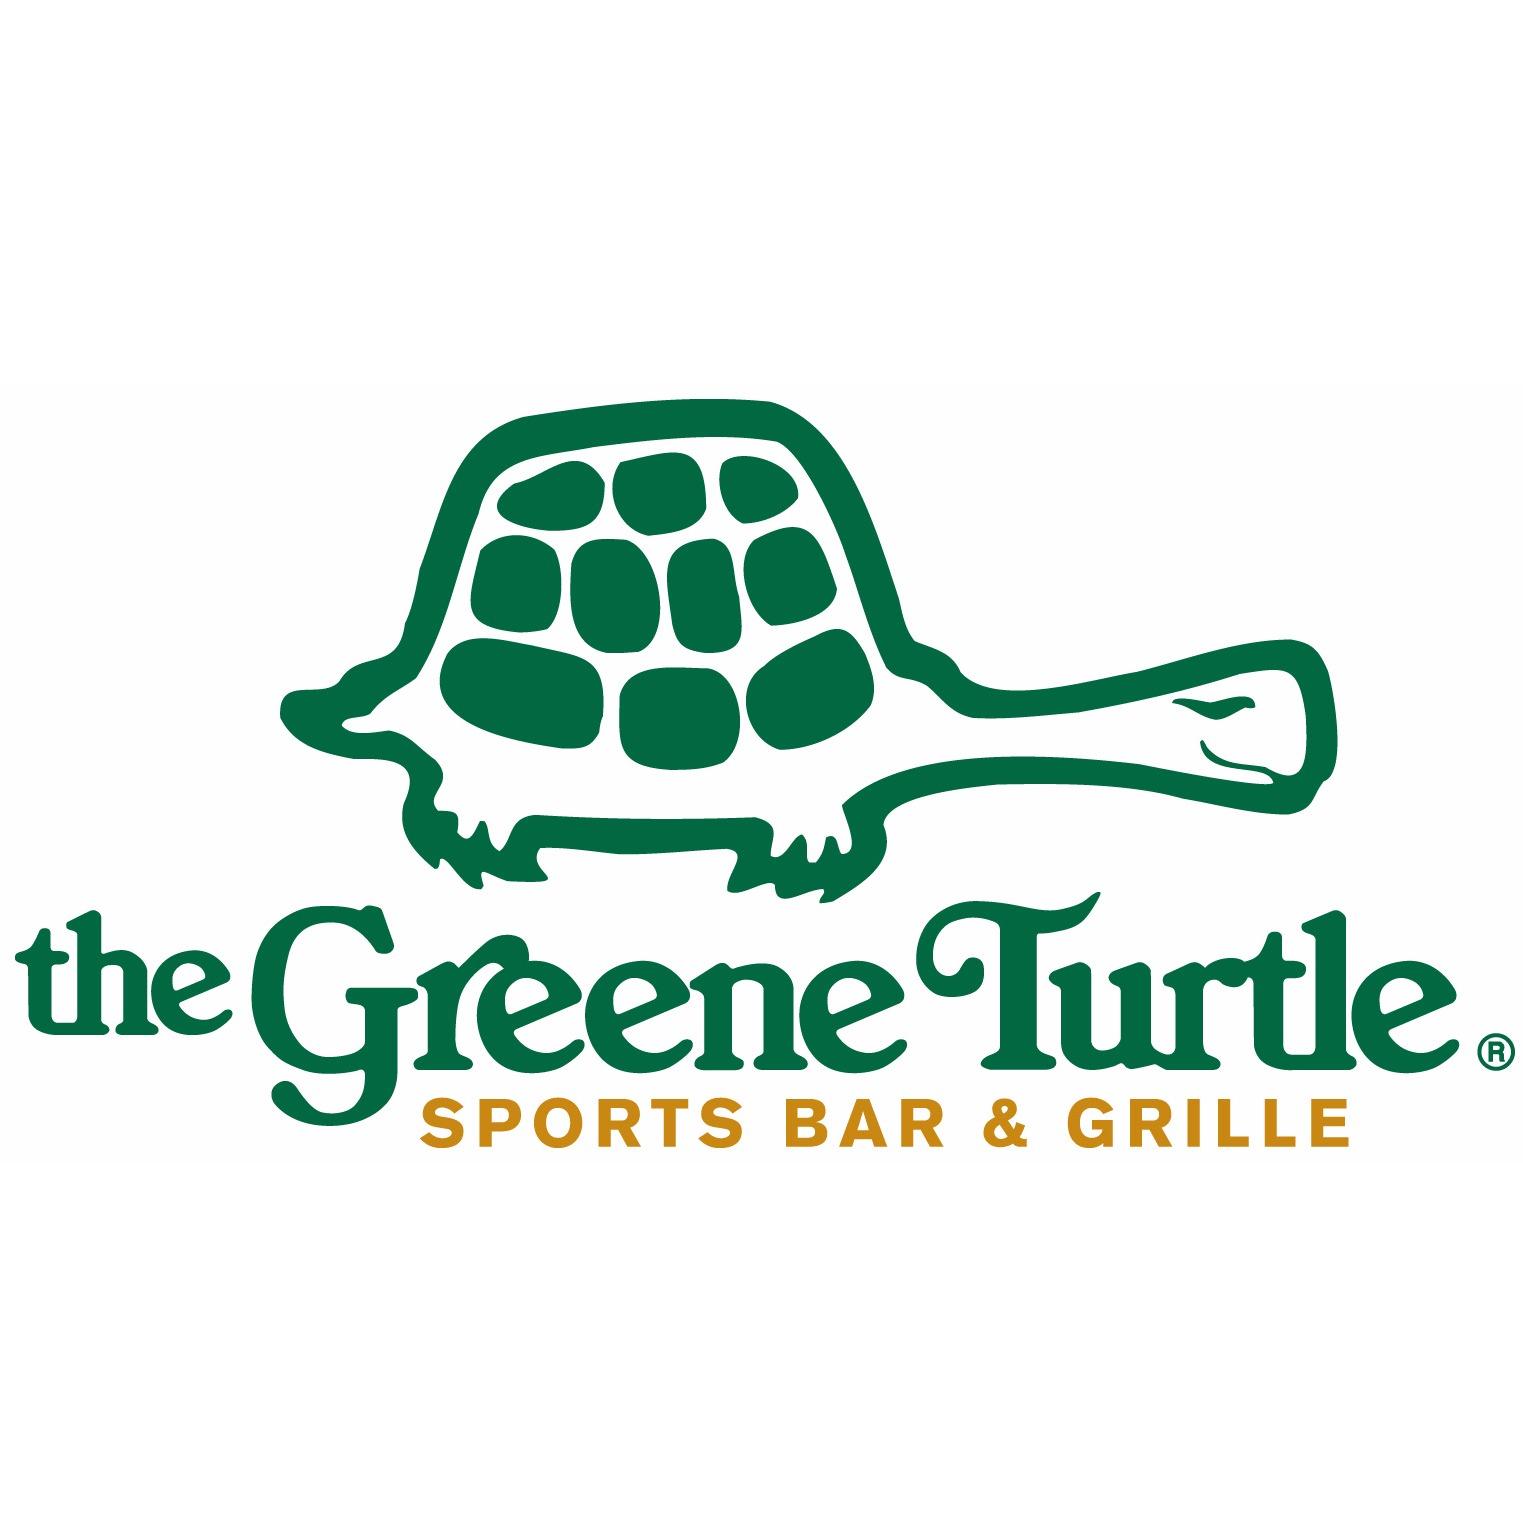 The Greene Turtle Sports Bar & Grille - Sterling, VA - Company Data